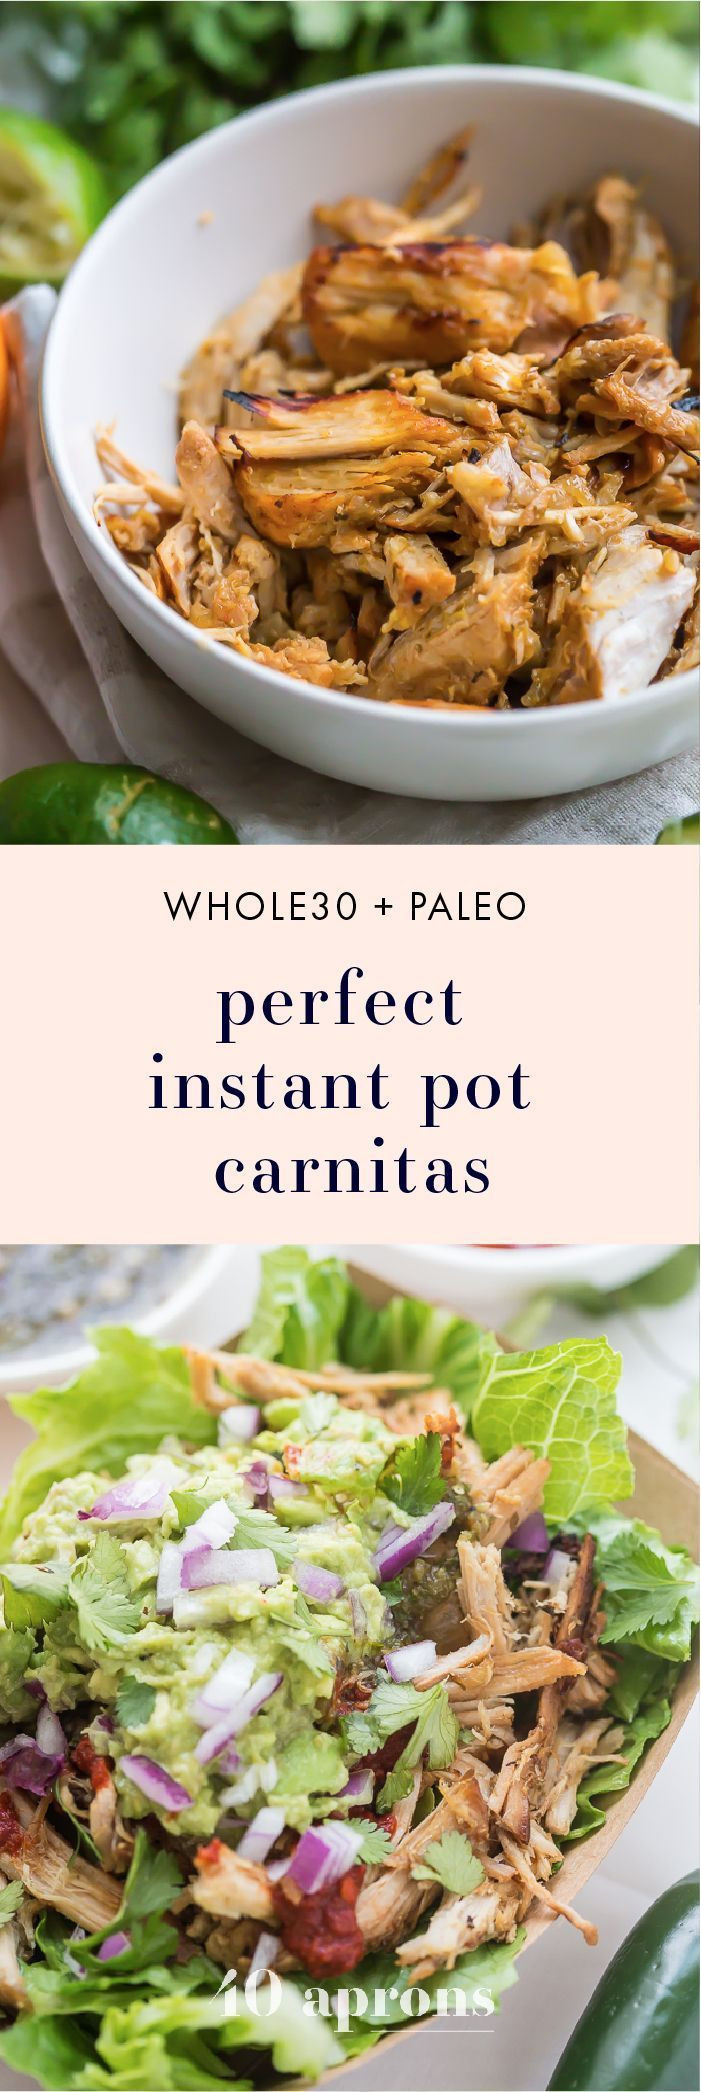 Best Paleo Instant Pot Recipes
 Perfect Paleo Instant Pot Carnitas Whole30